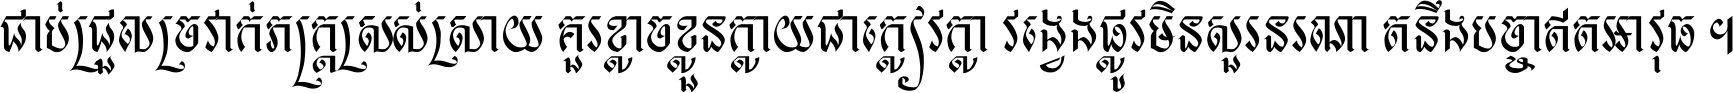 Khmer HUYSAVY S